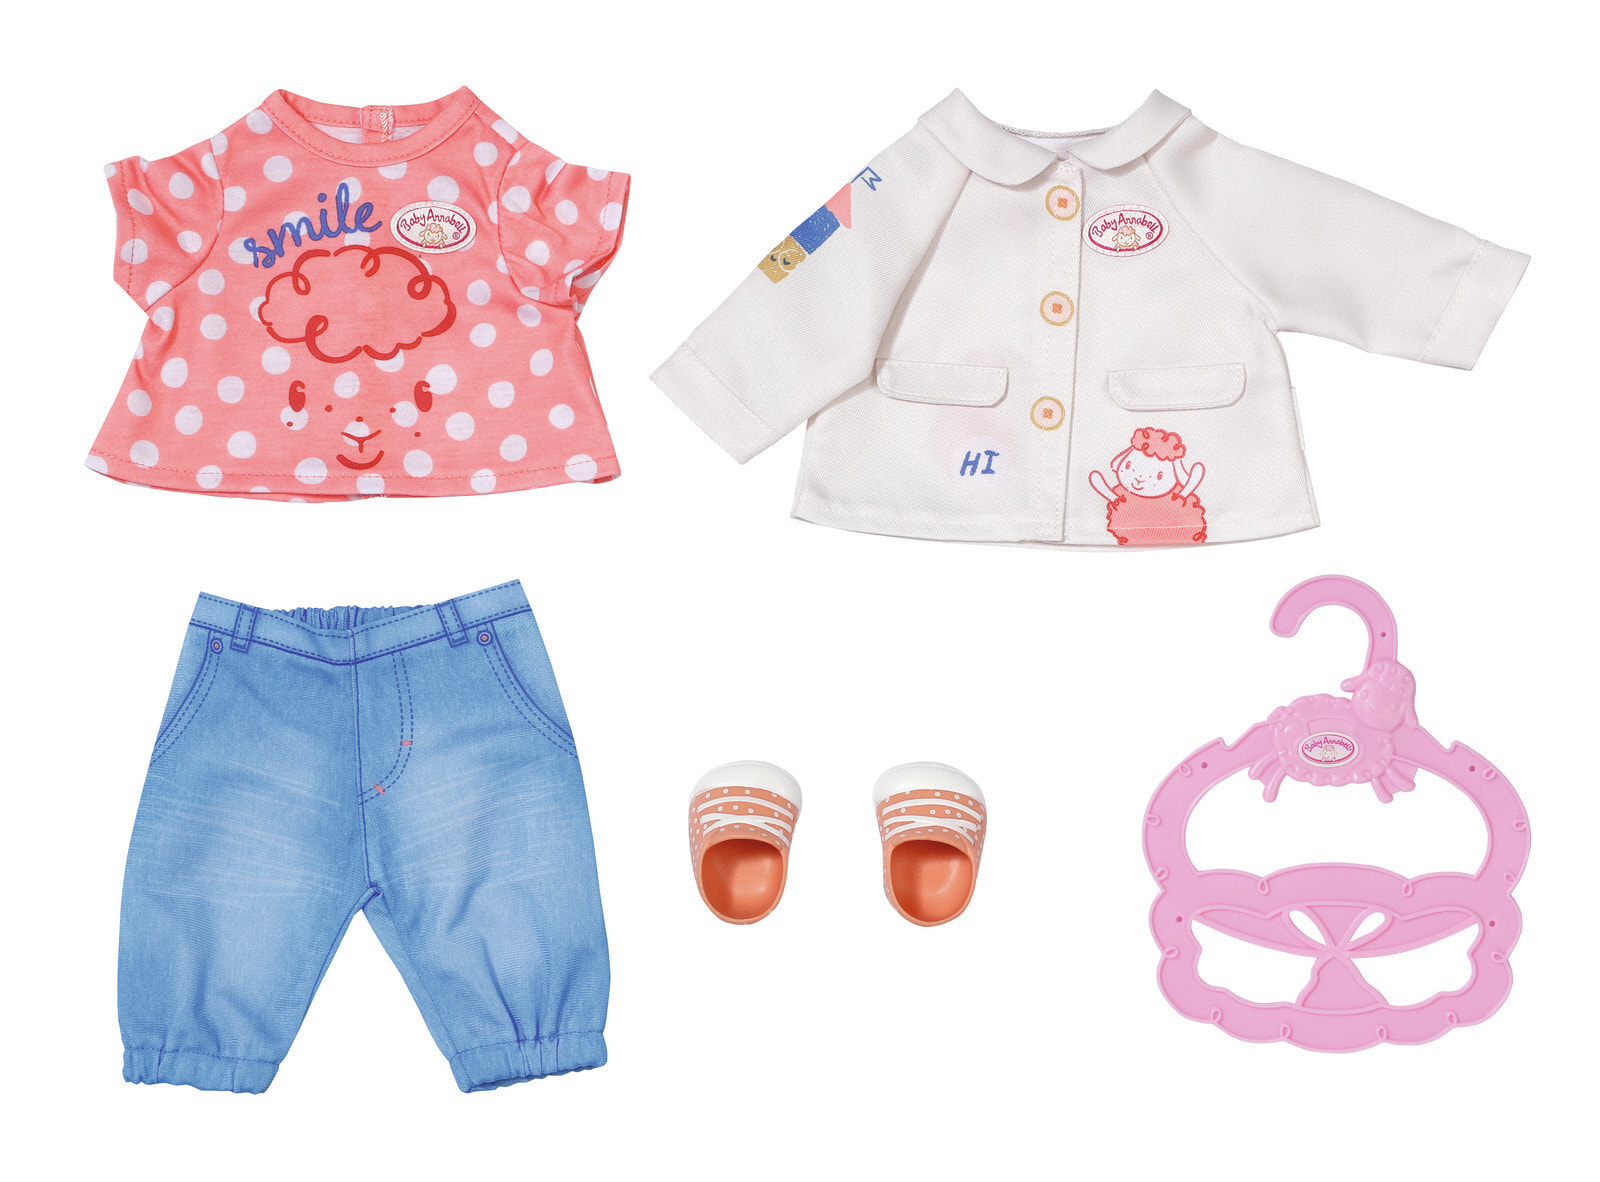 Baby Annabell Little Play Outfit Комплект одежды для куклы ,704127